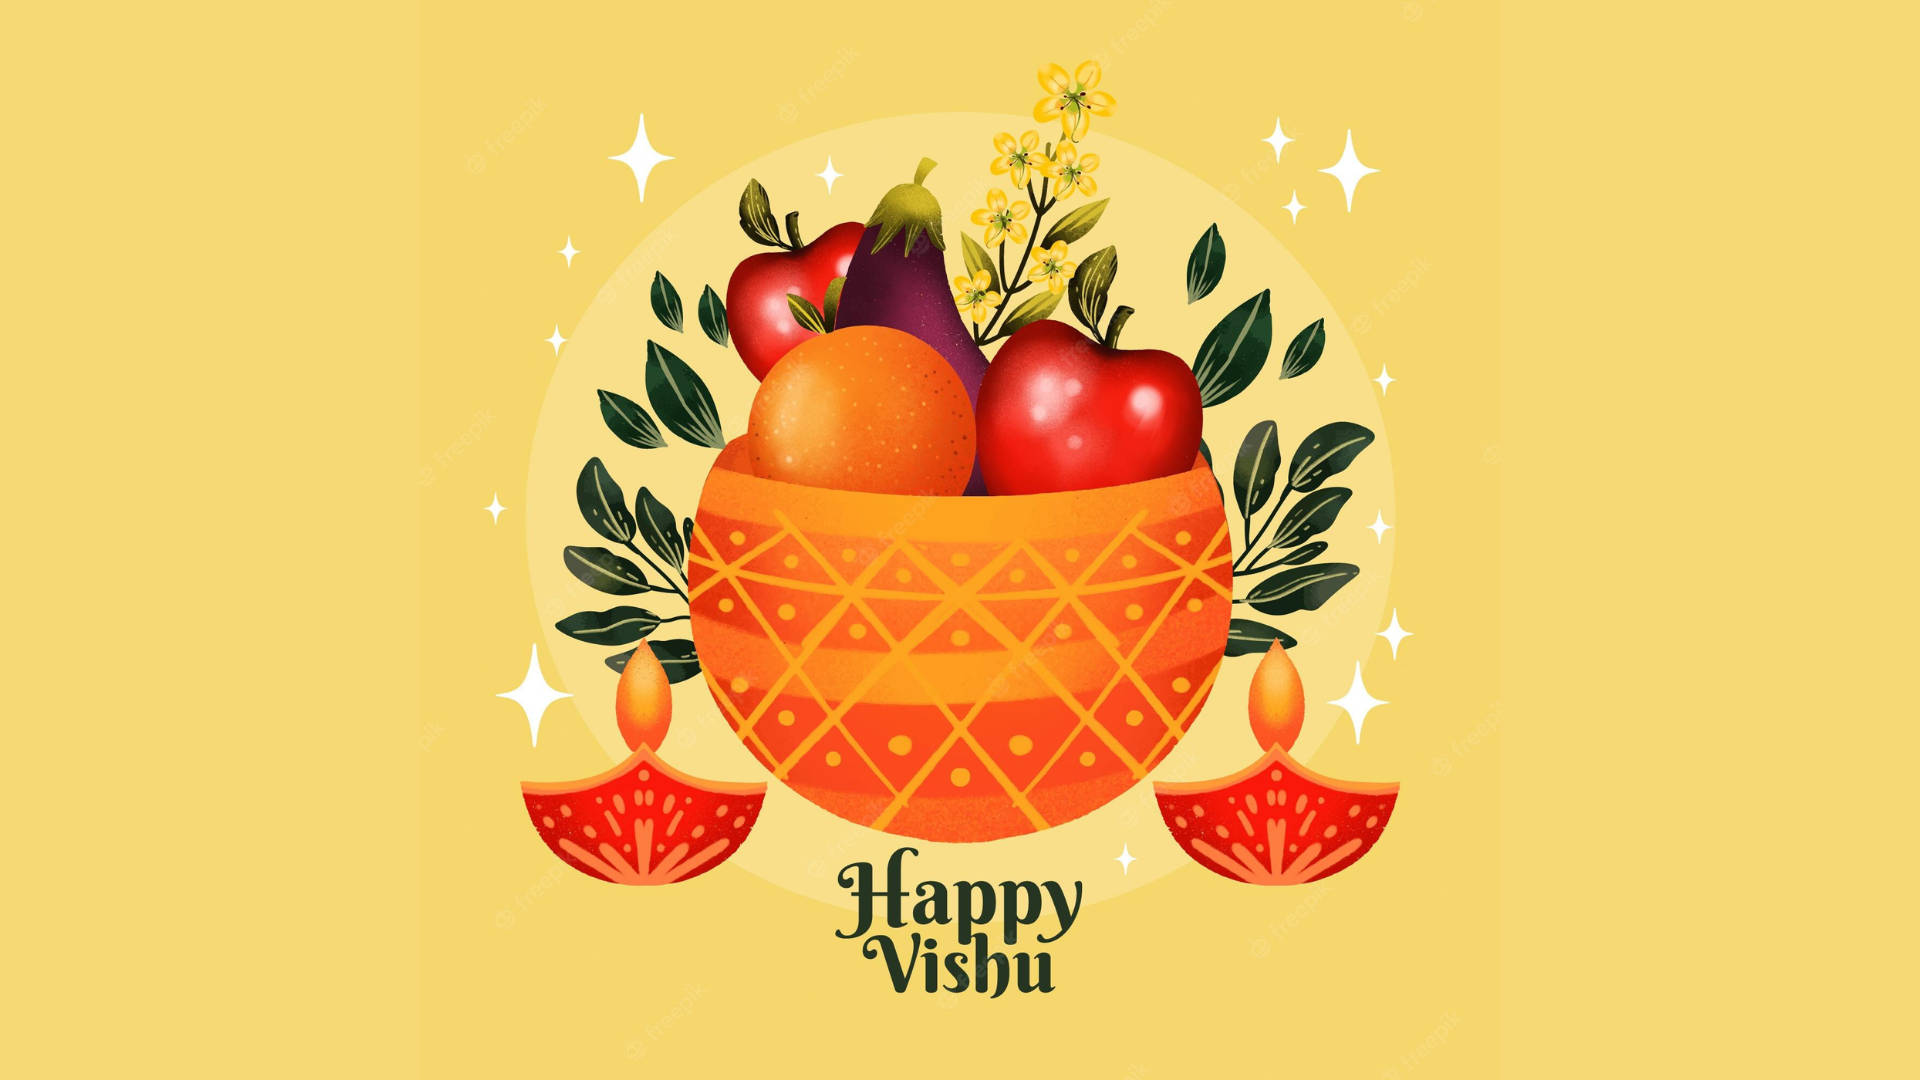 Happy Vishu Fruit Basket On Yellow Background Wallpaper